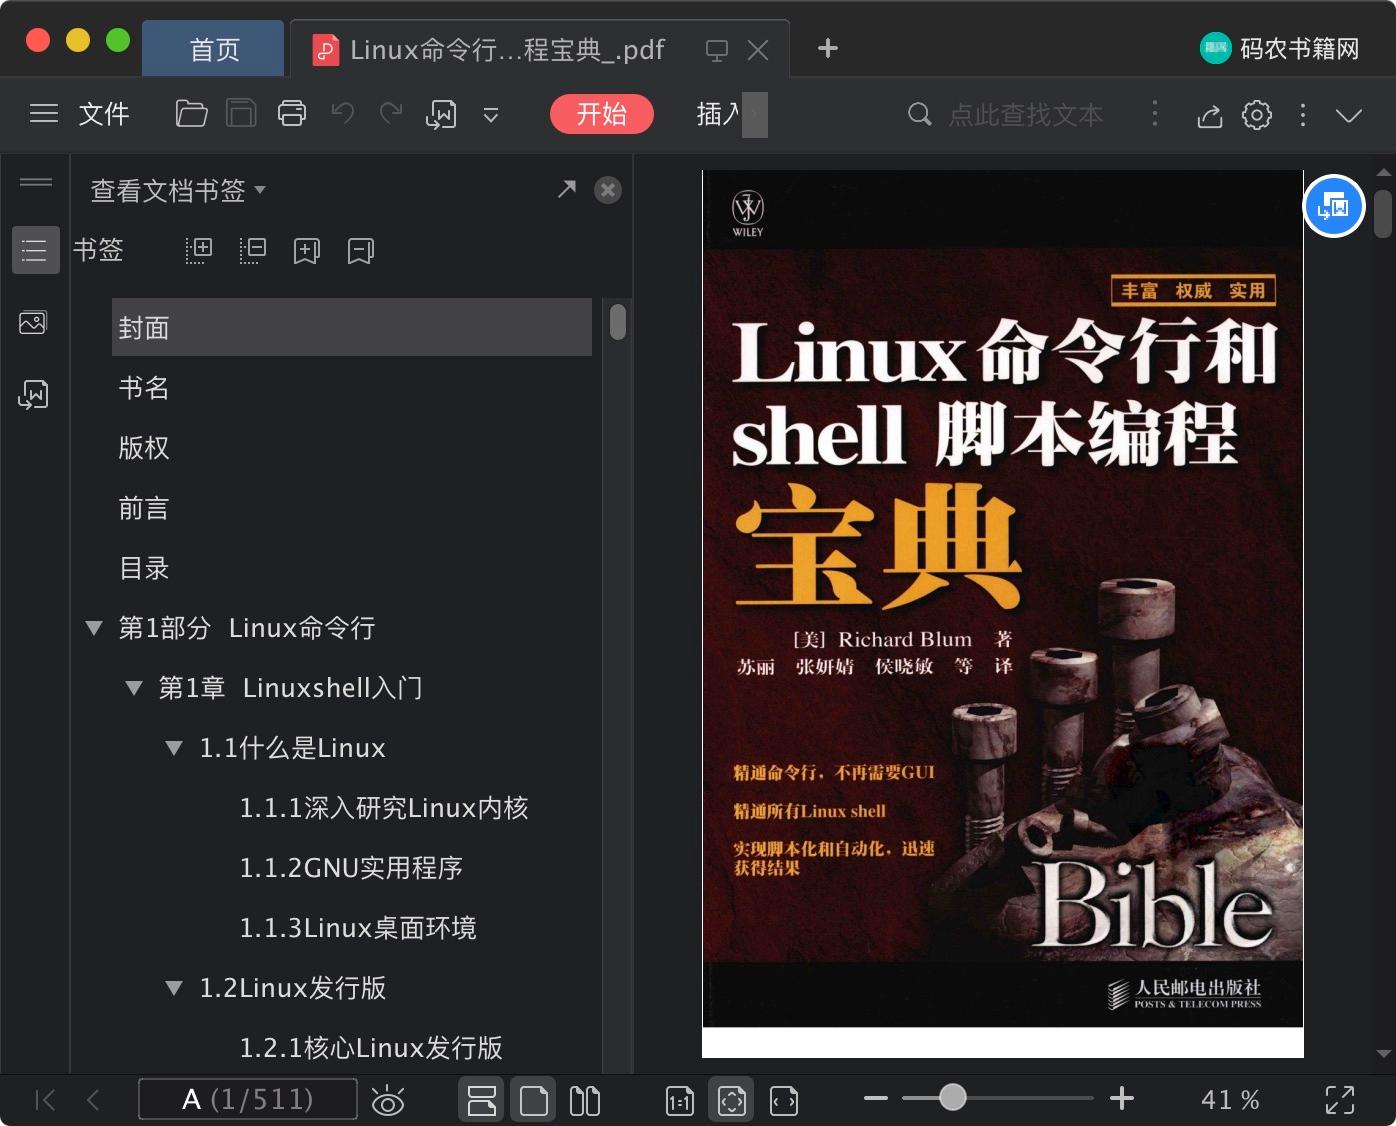 Linux教程命令行和shell脚本编程宝典pdf电子书籍下载百度云